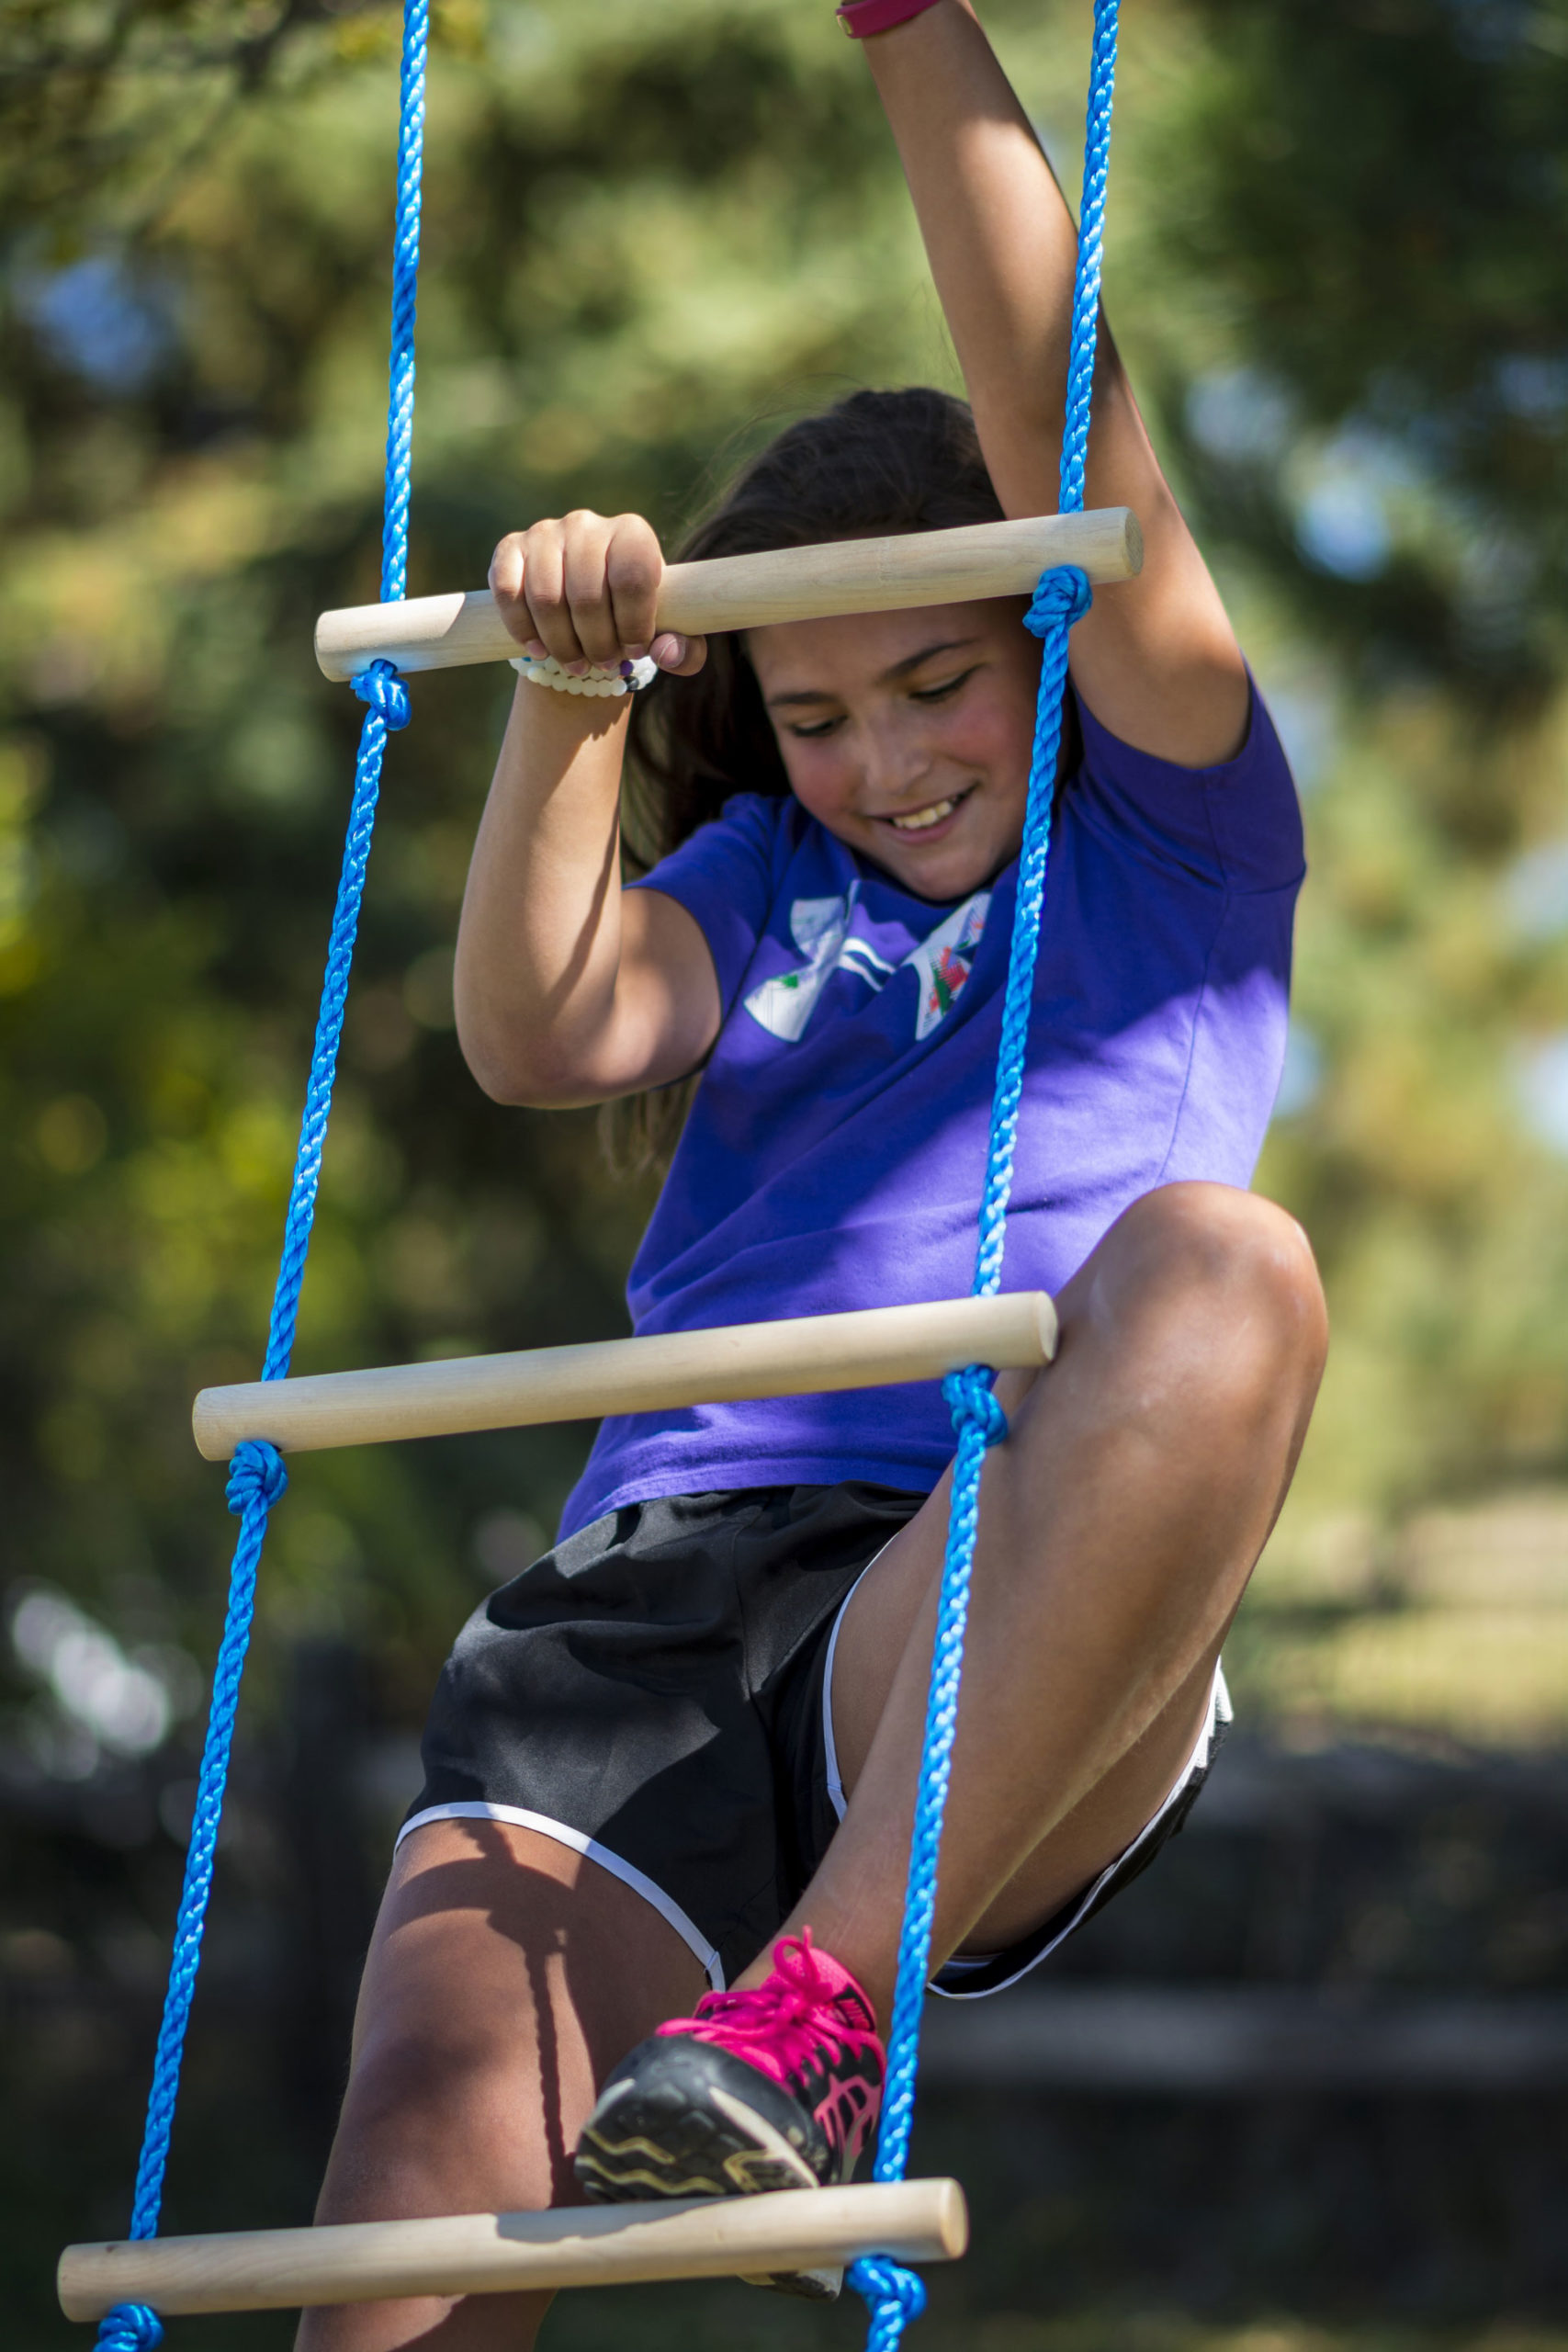 Slackers 8' Ninja Rope Ladder  Ninjaline Obstacle – Bolder Play